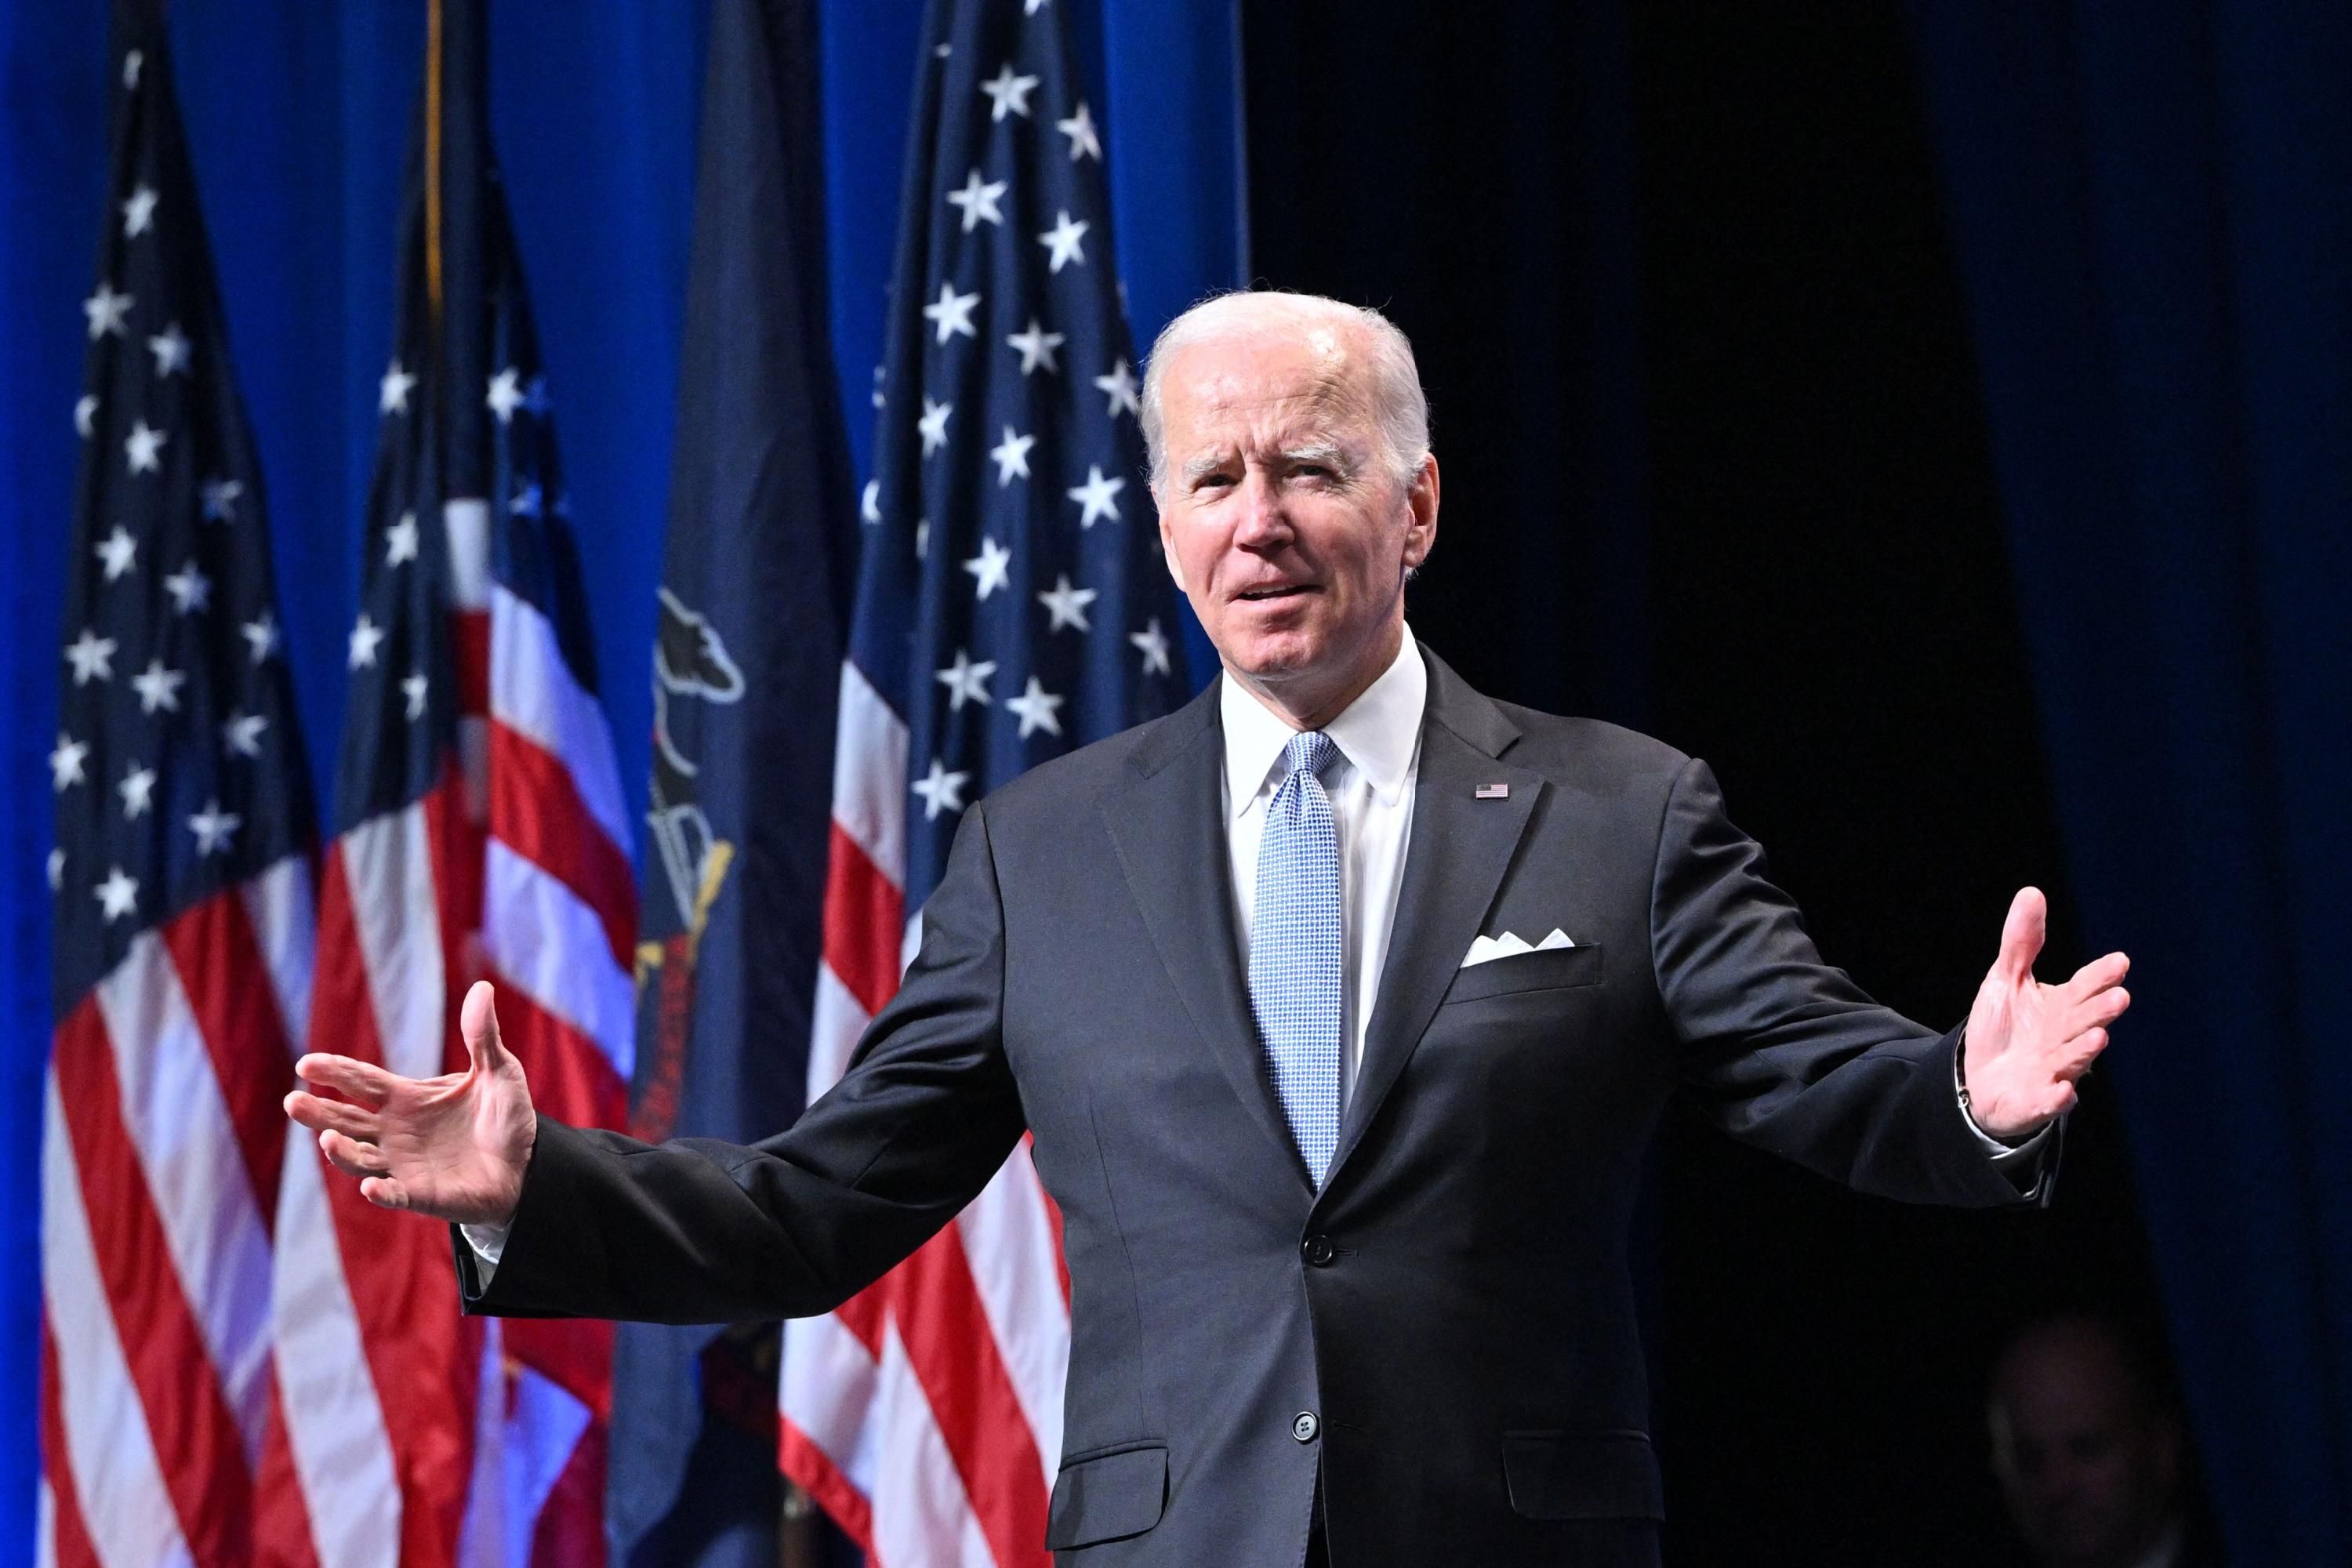 President Joe Biden appears at an event in Philadelphia